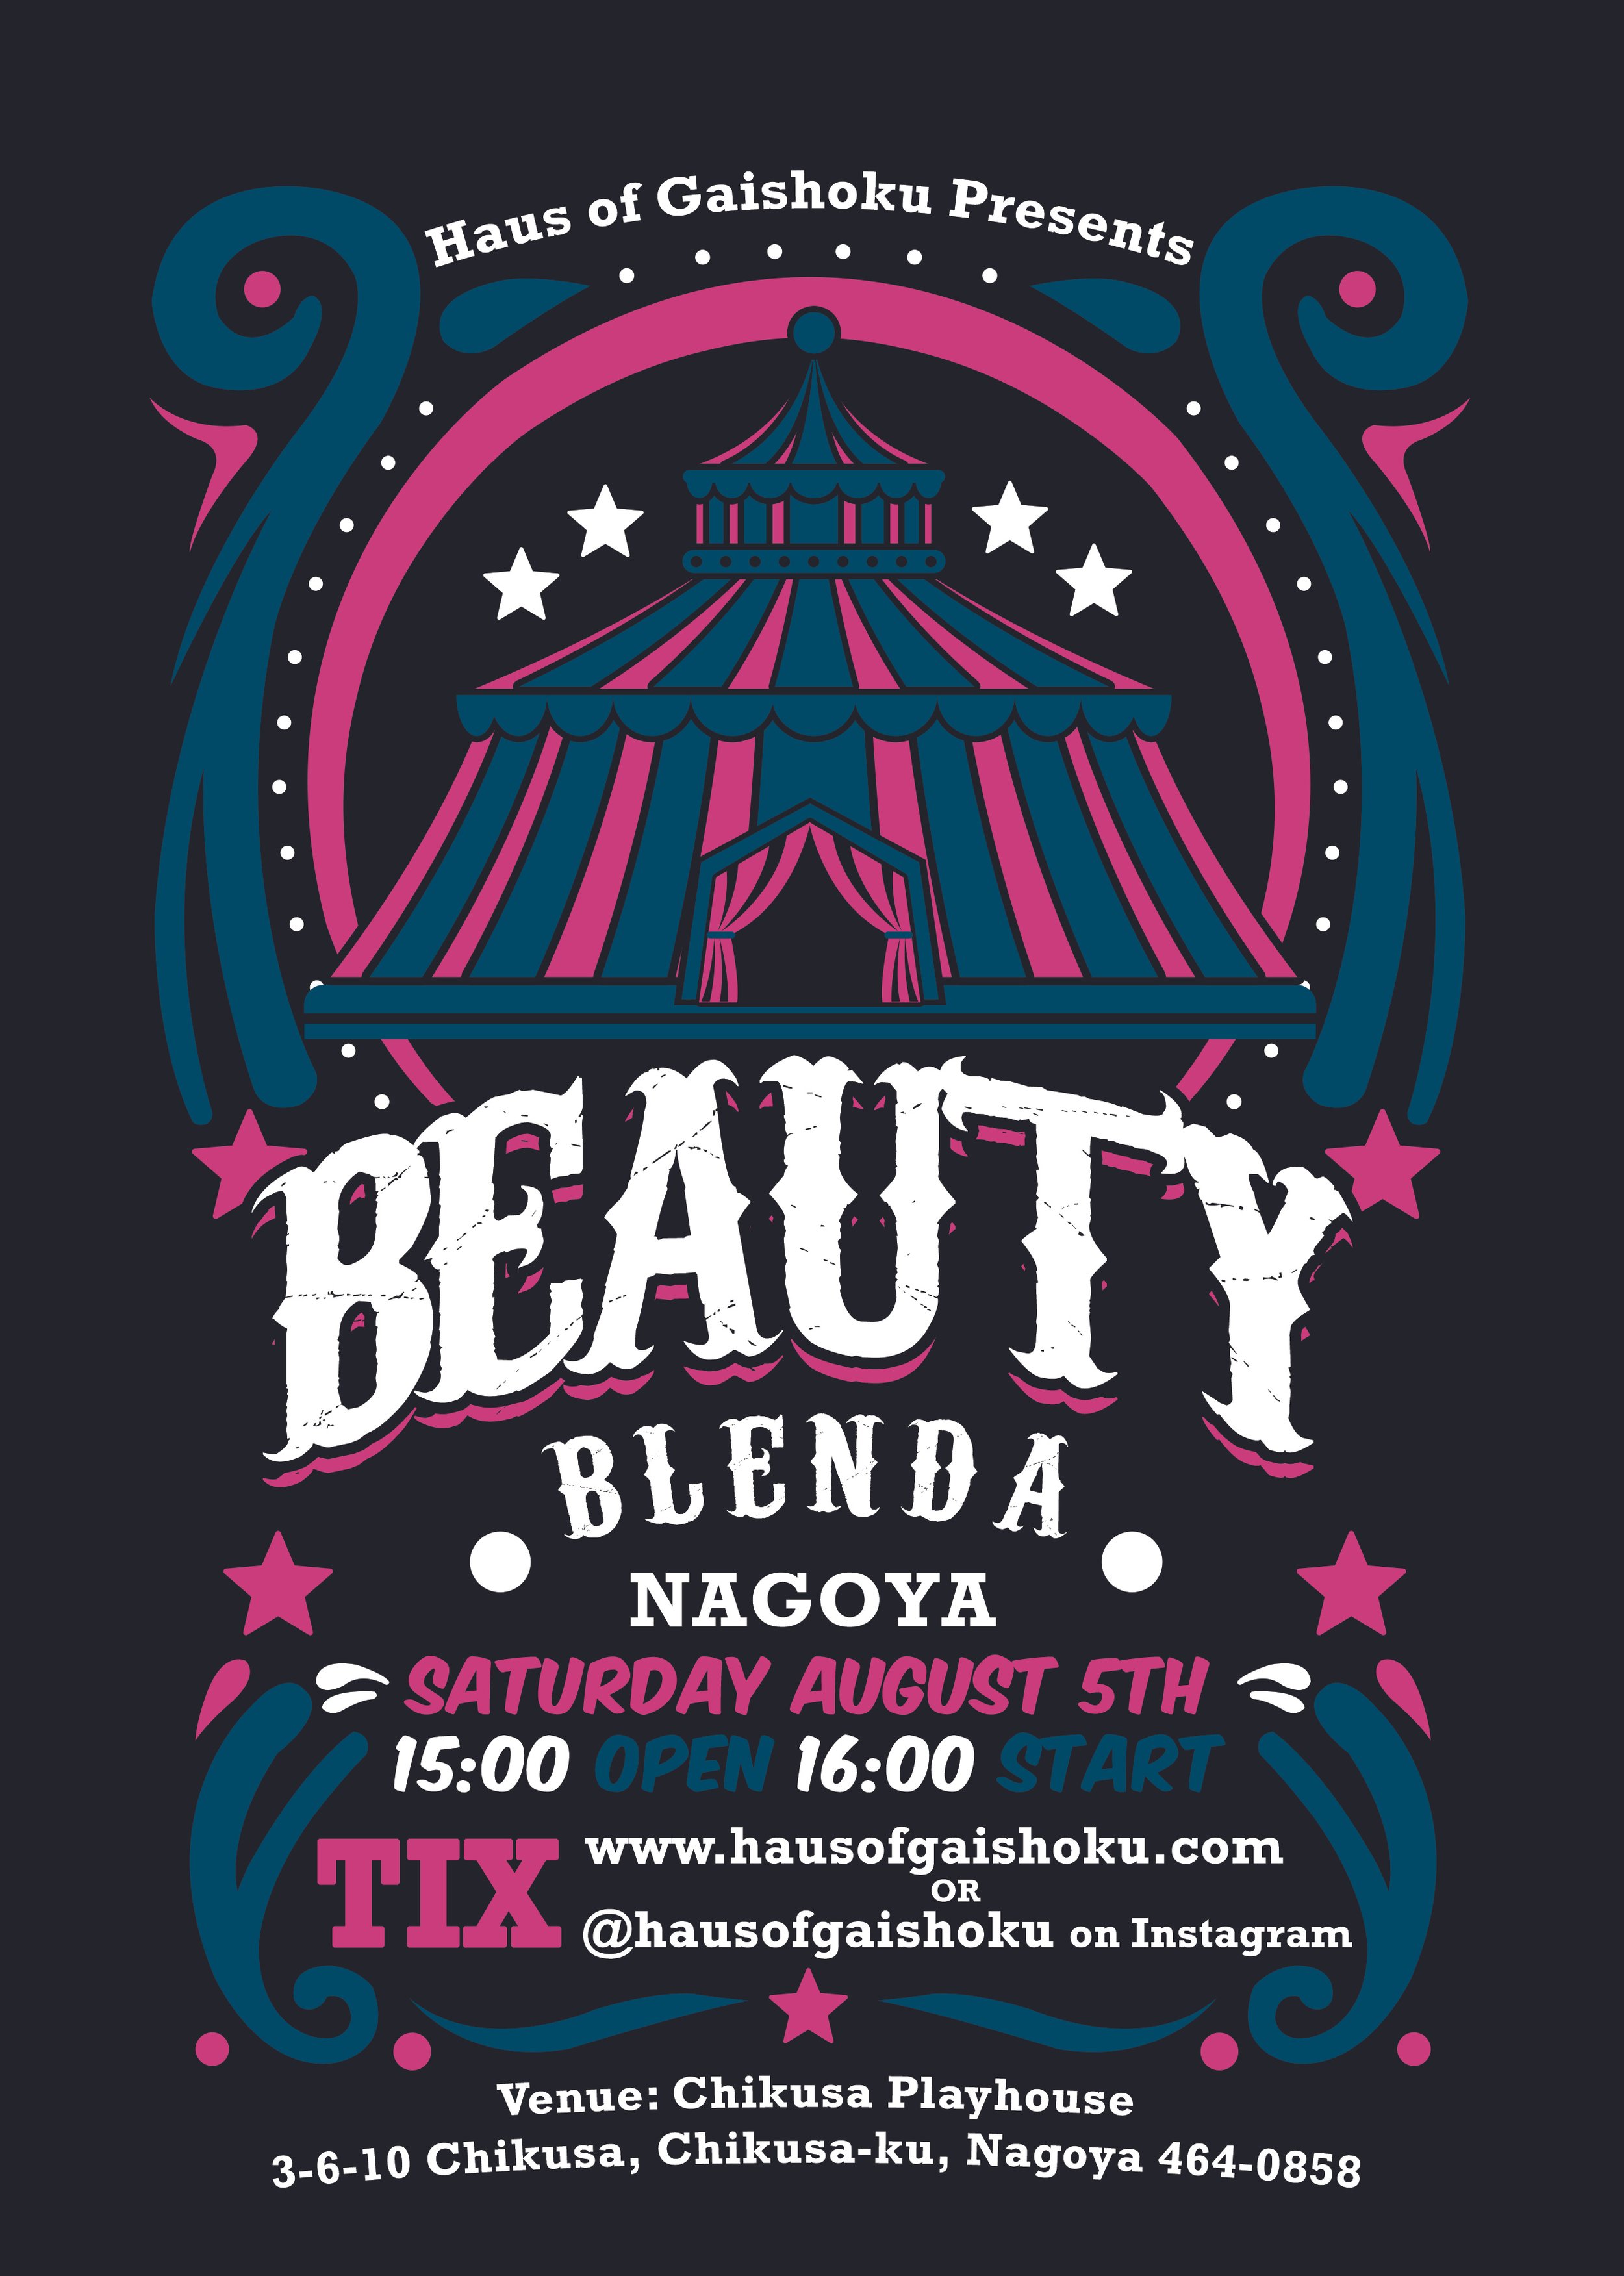 nagoya circus flyer.jpg